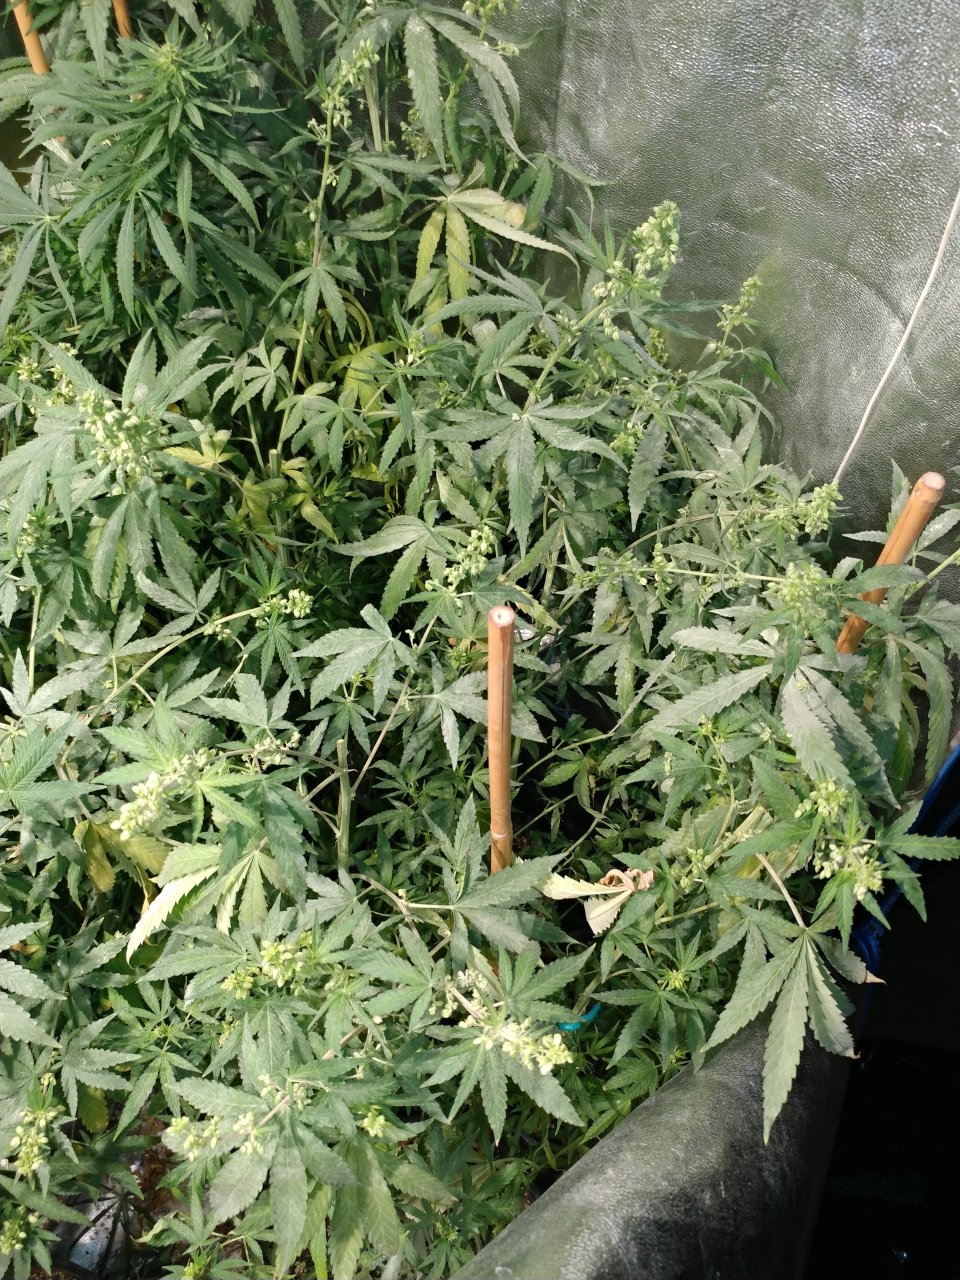 Icemud_bangi haze_cannabis_seed_grow_led grow light (3).jpg